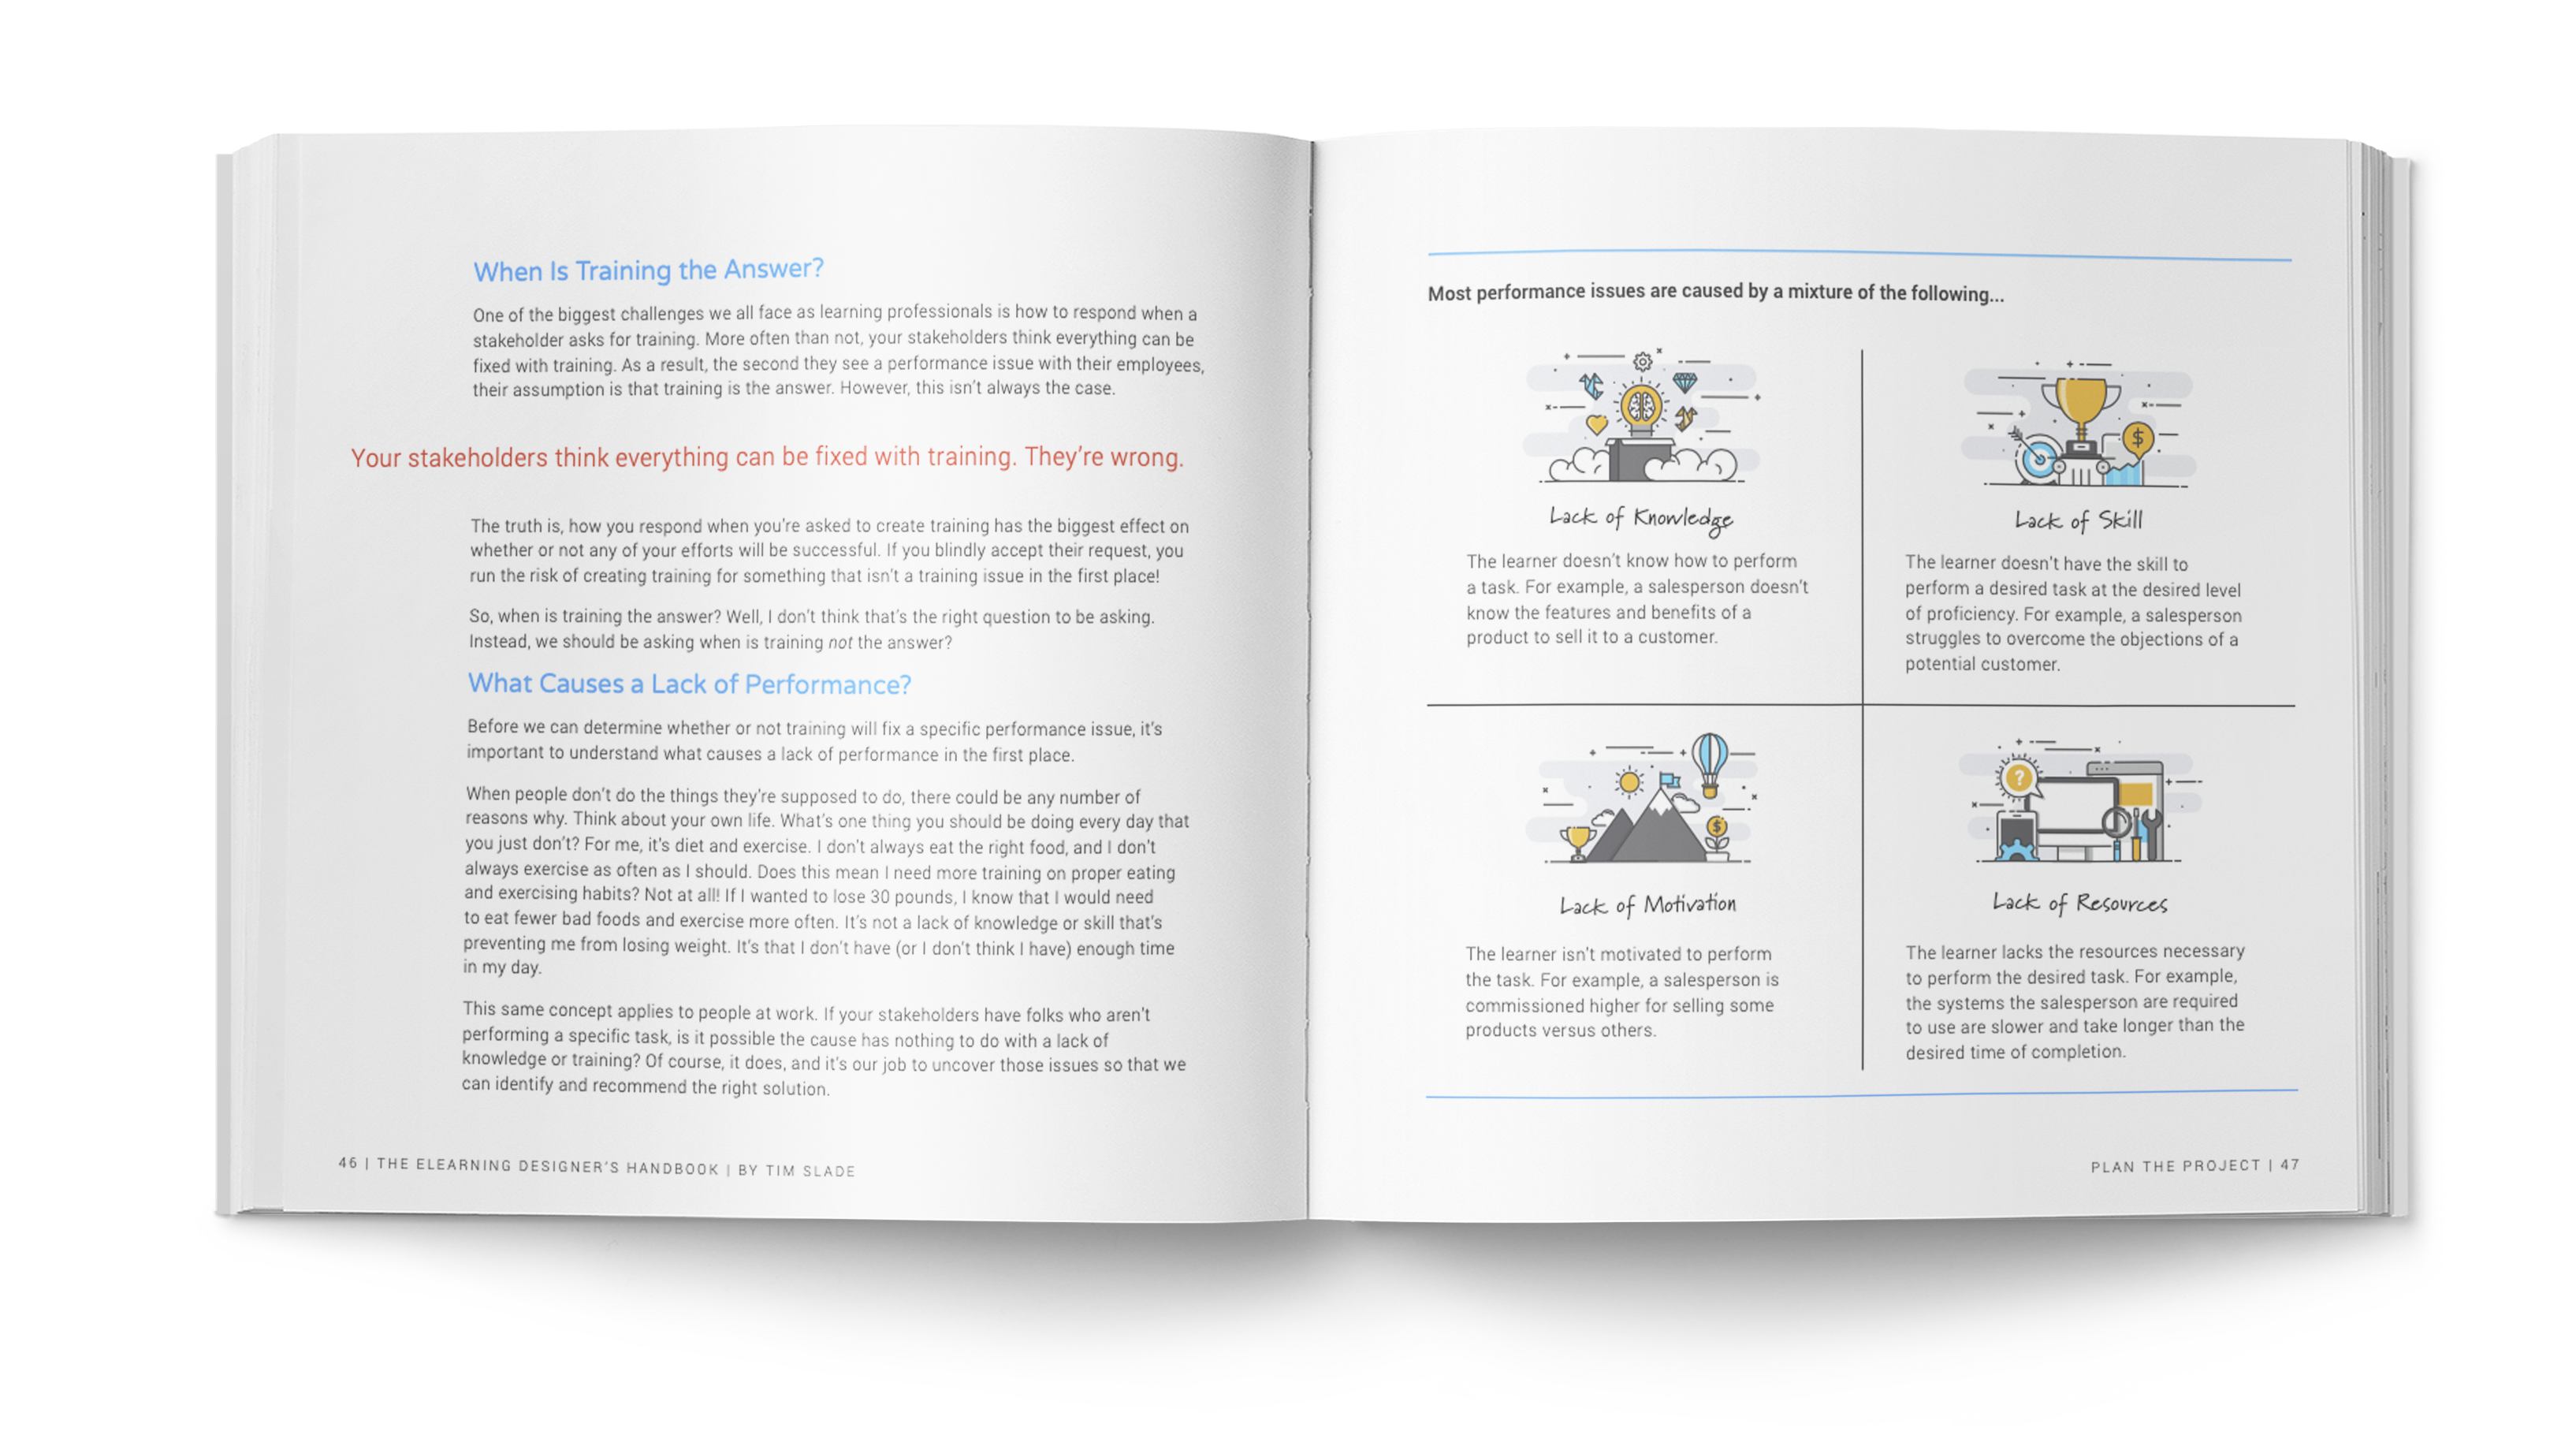 The eLearning Designer's Handbook by Tim Slade | Plan the Project | Freelance eLearning Designer | The eLearning Designer's Academy